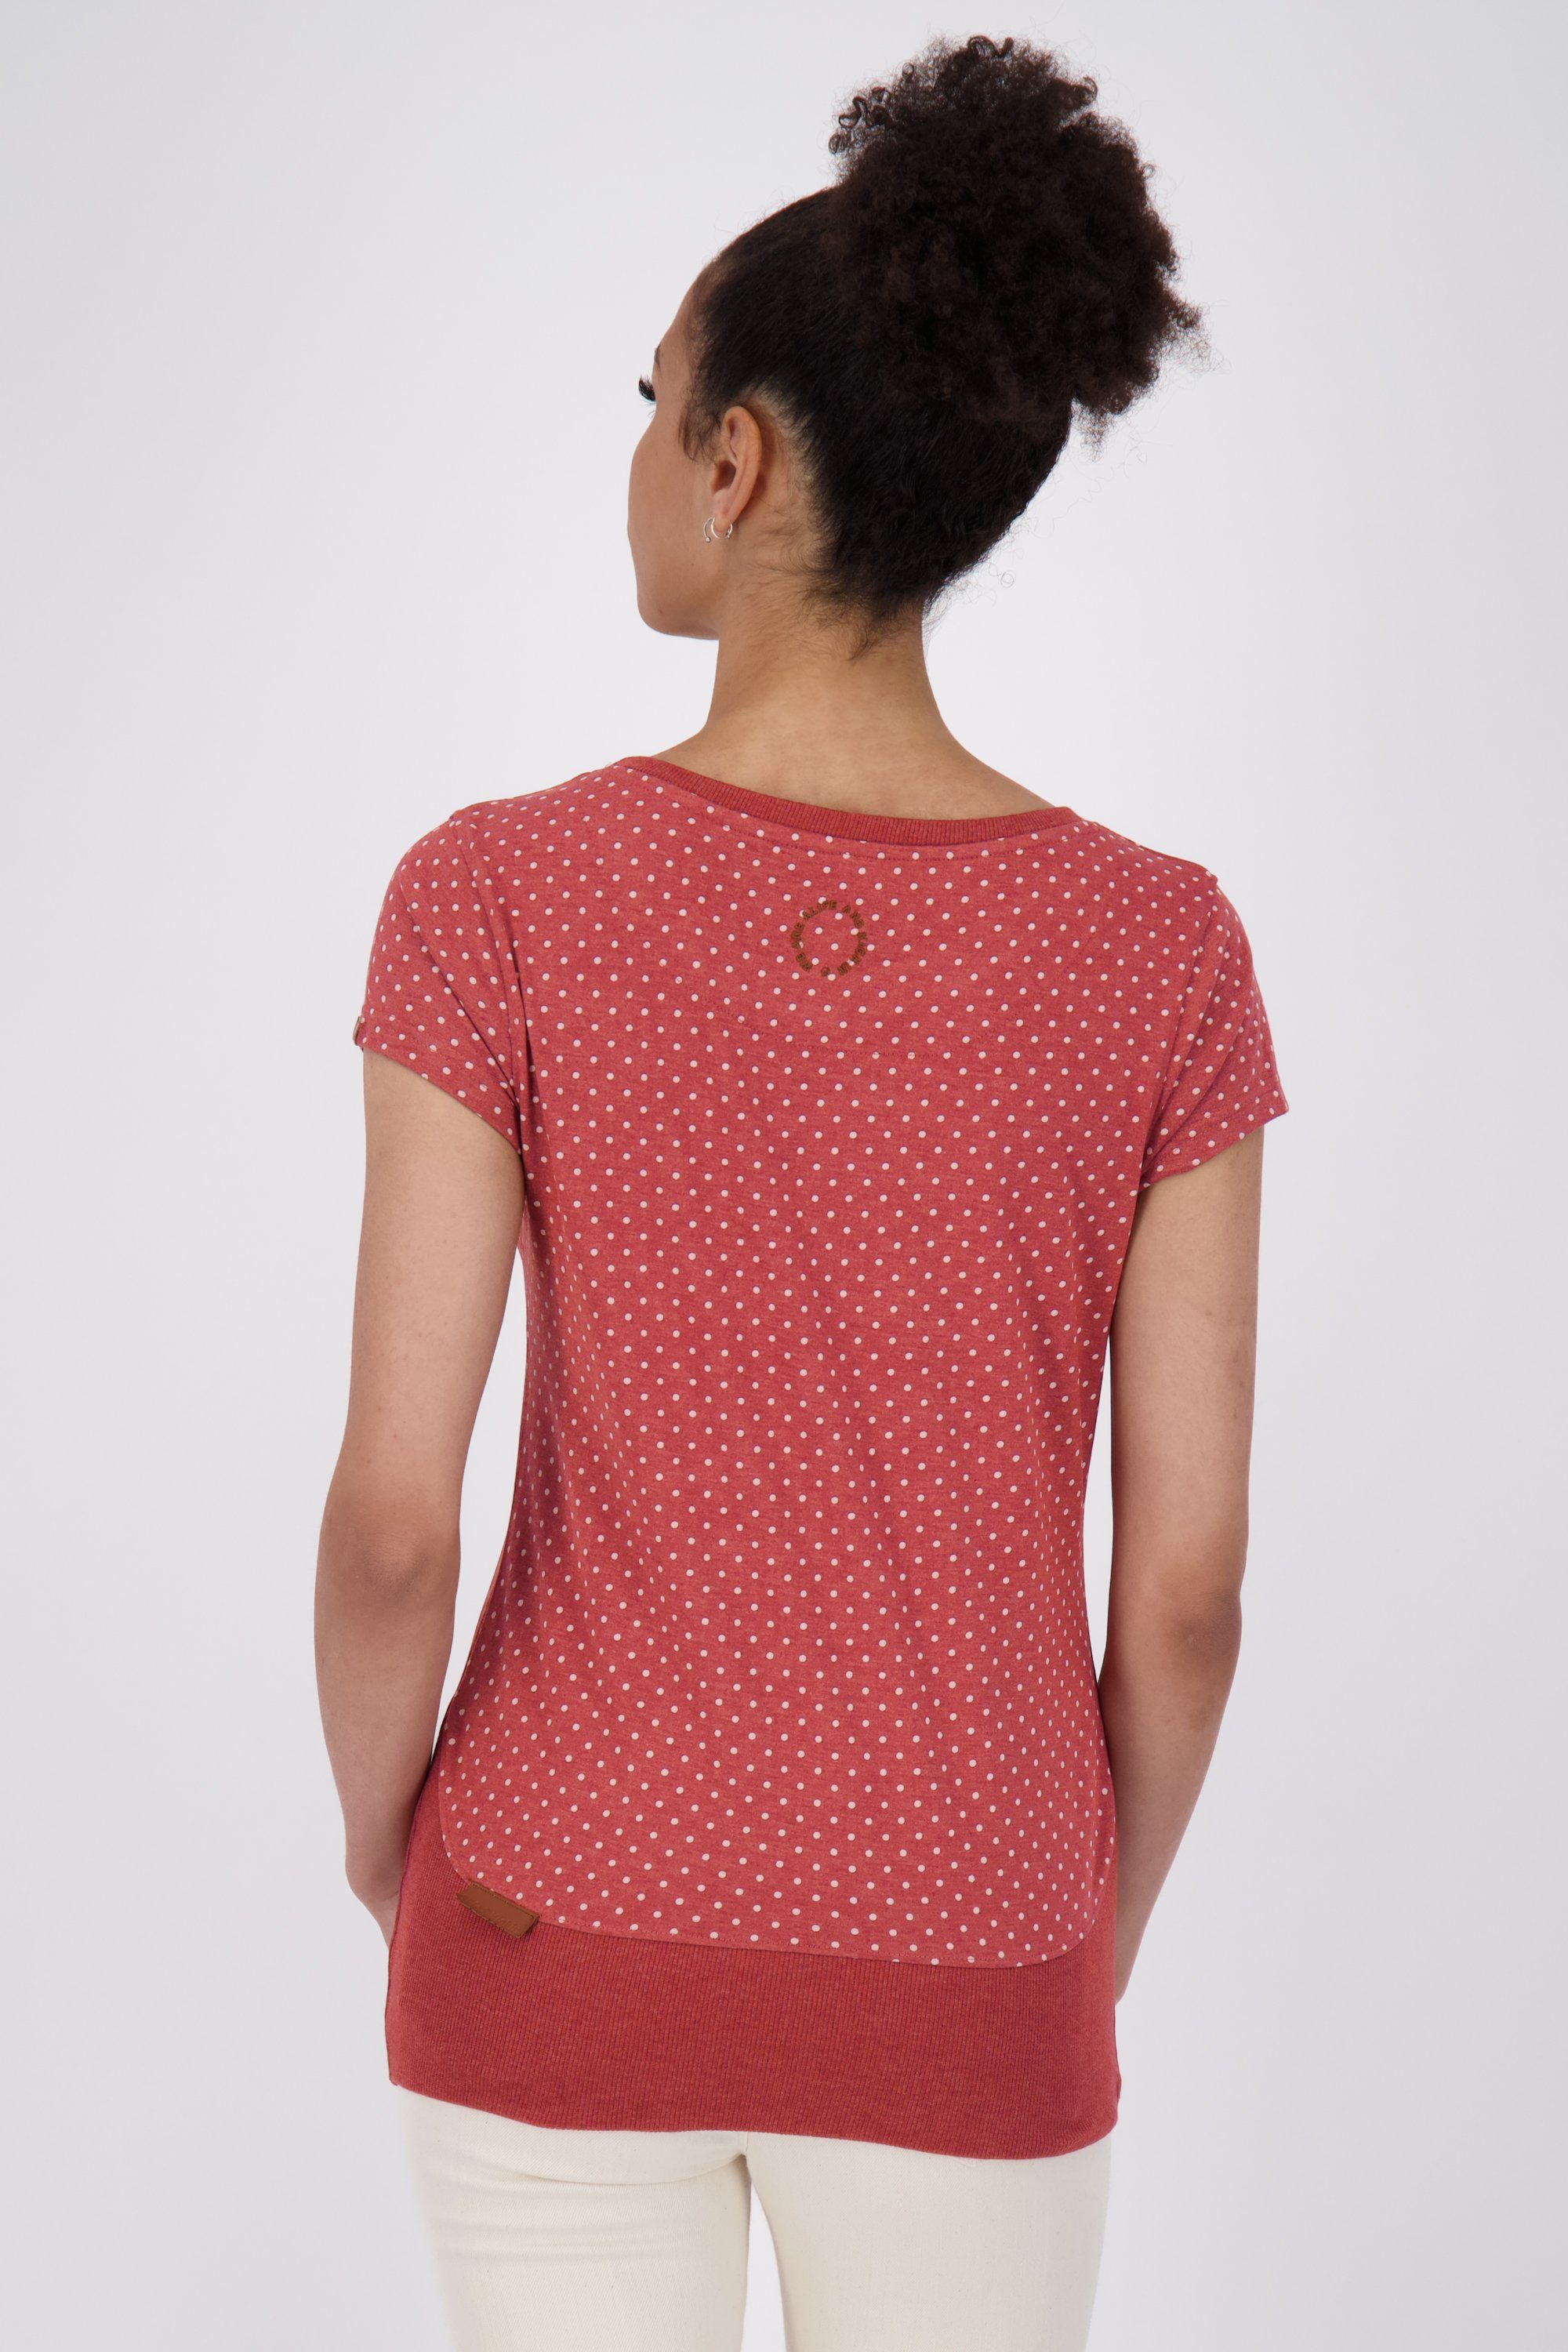 Alife Shirt T-Shirt cranberry CocoAK & Damen T-Shirt Kickin melange B